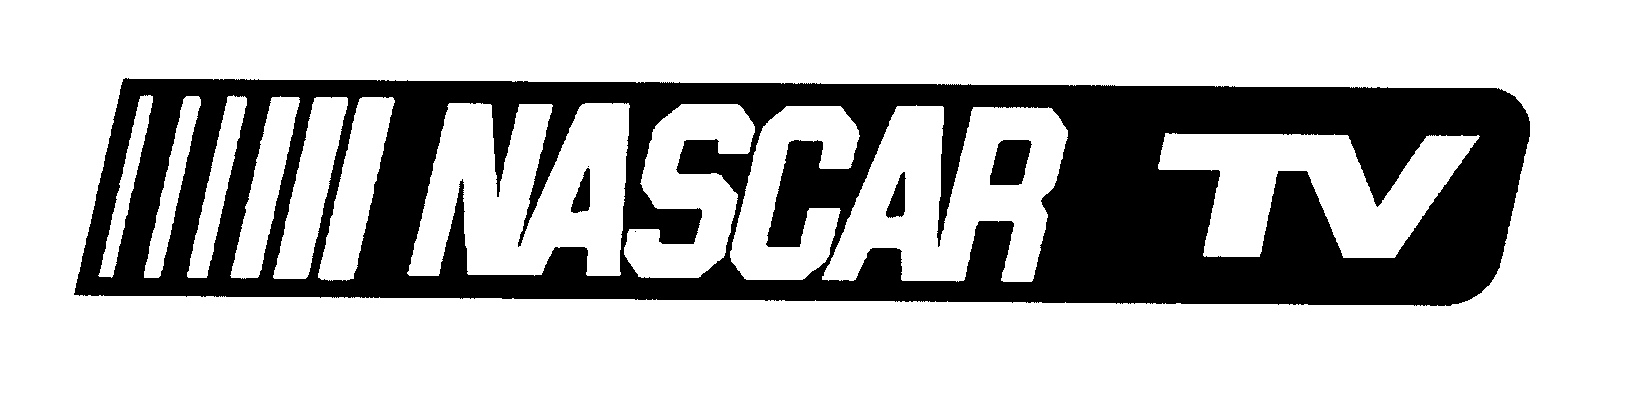  NASCAR TV